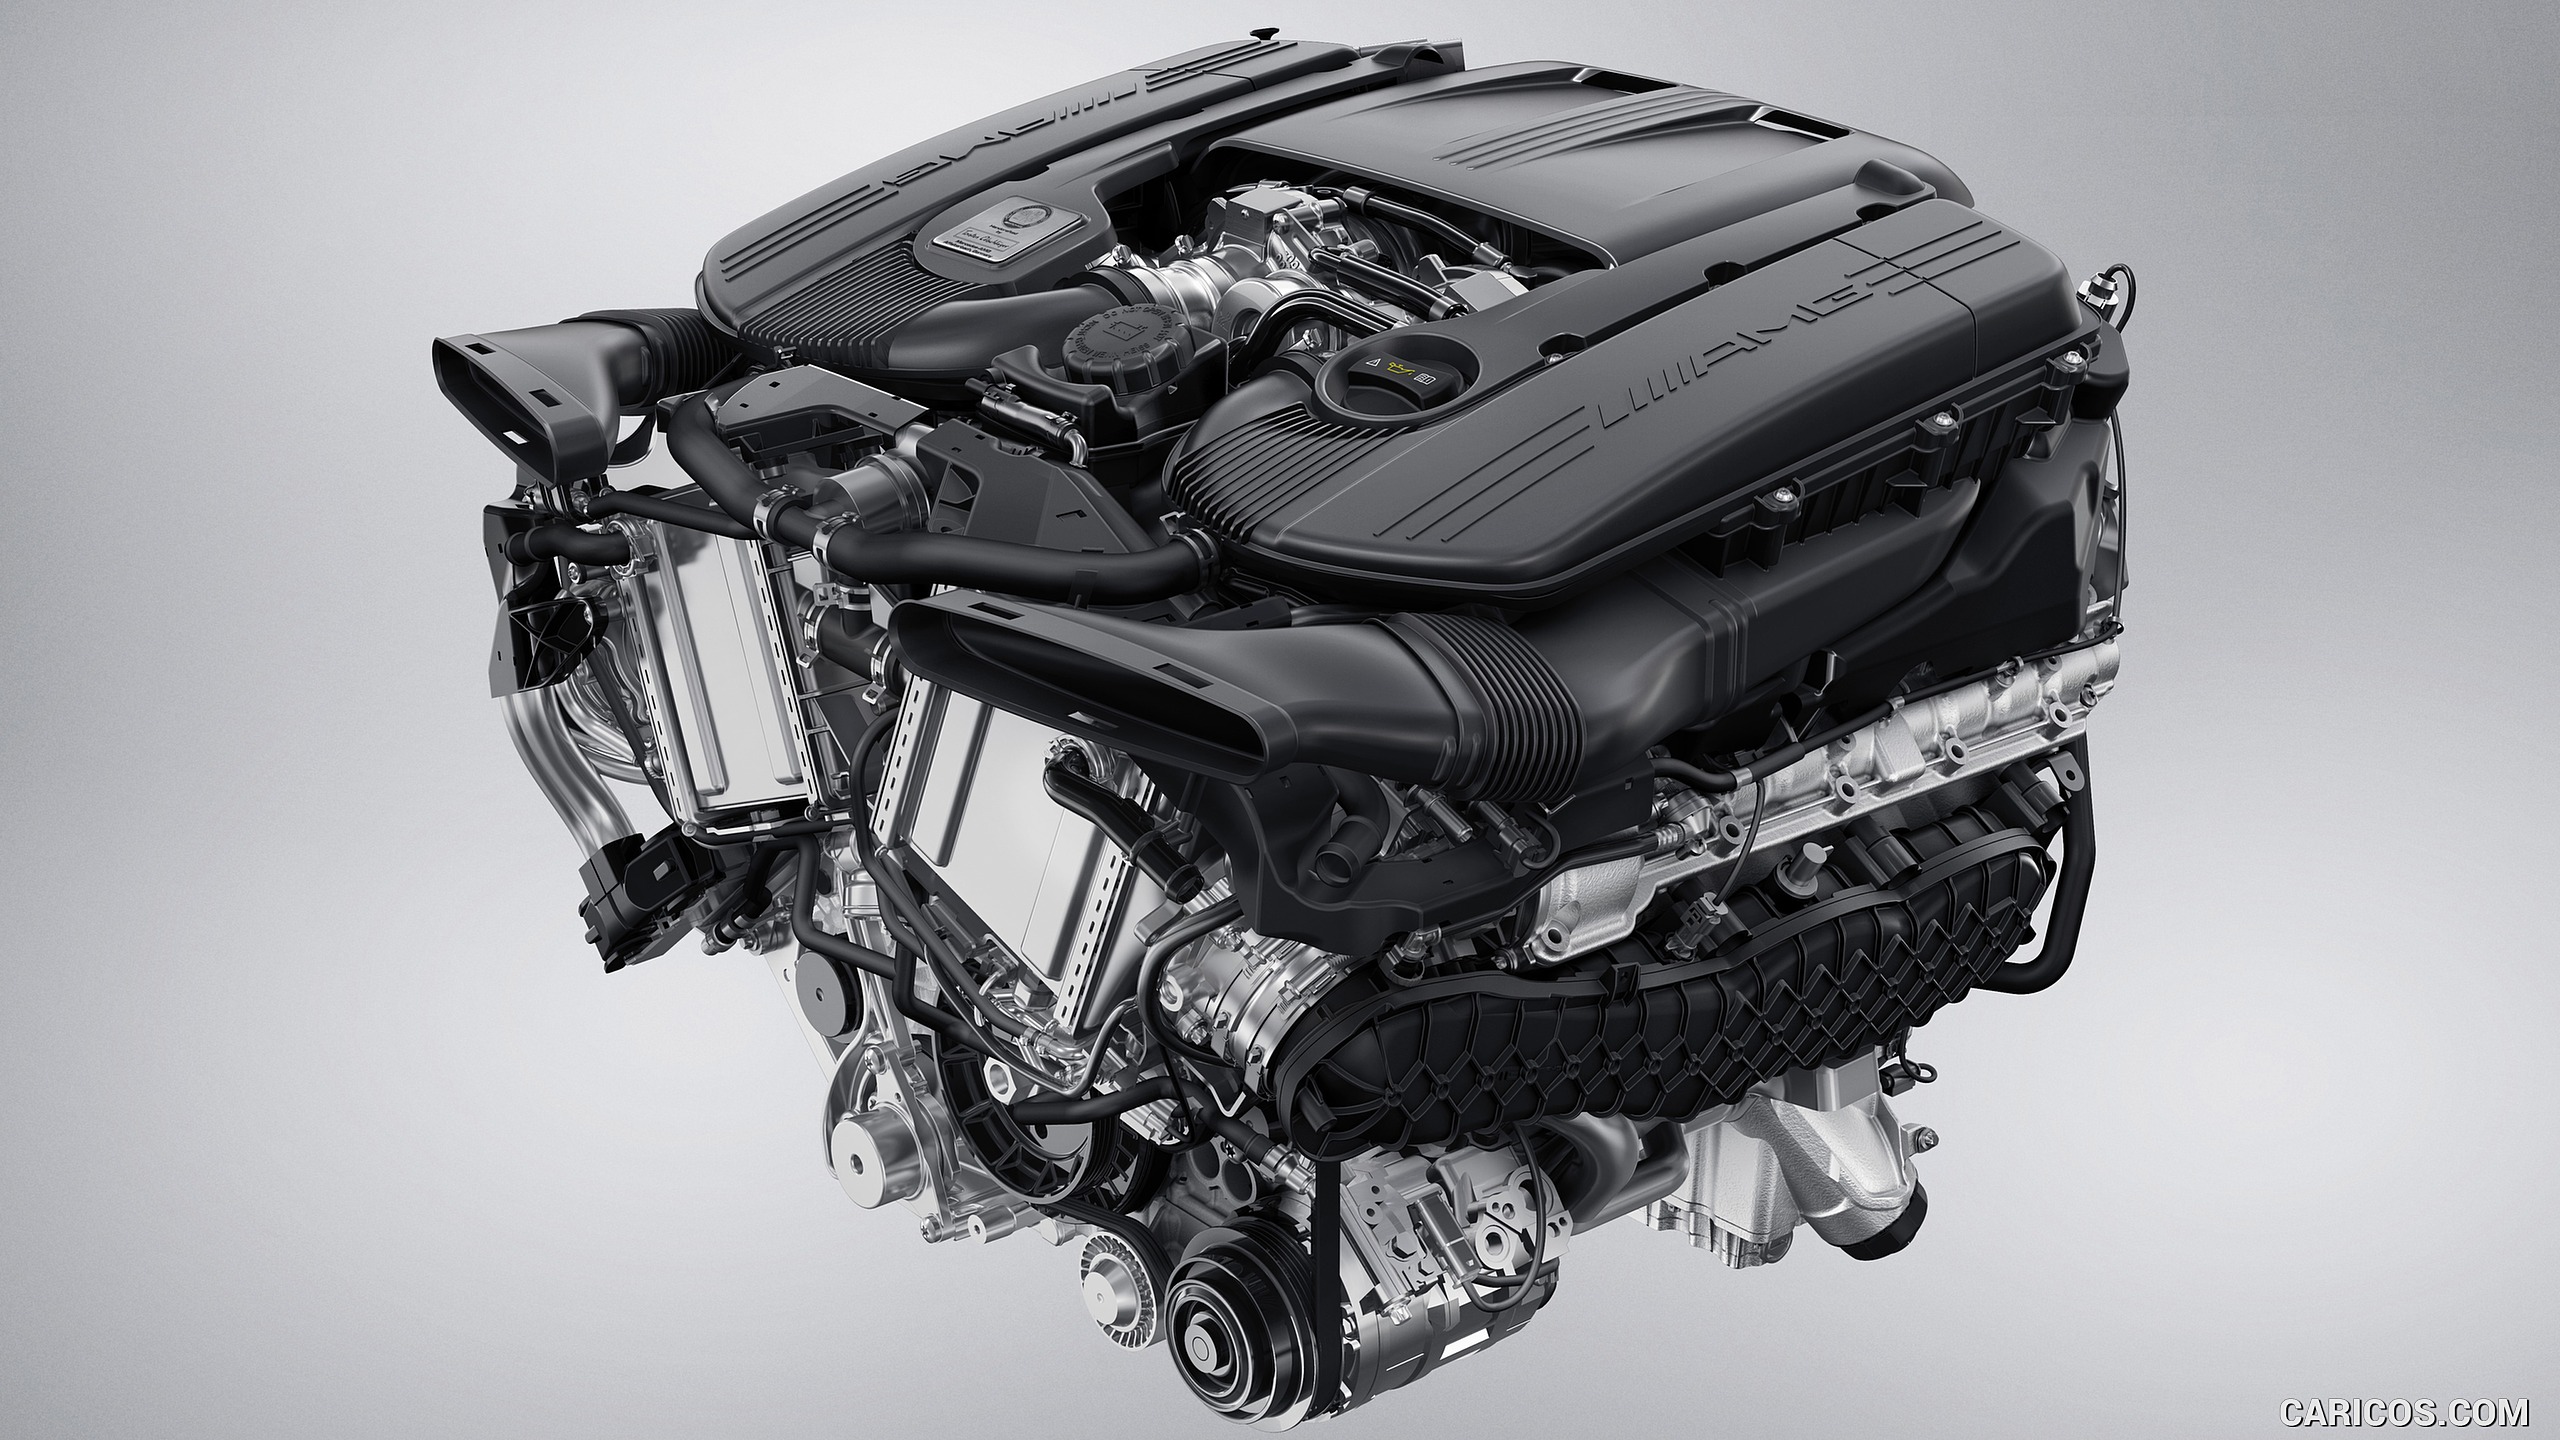 2017 Mercedes-AMG C63 S Coupe - AMG 4.0L V8 Biturbo Engine, #37 of 107